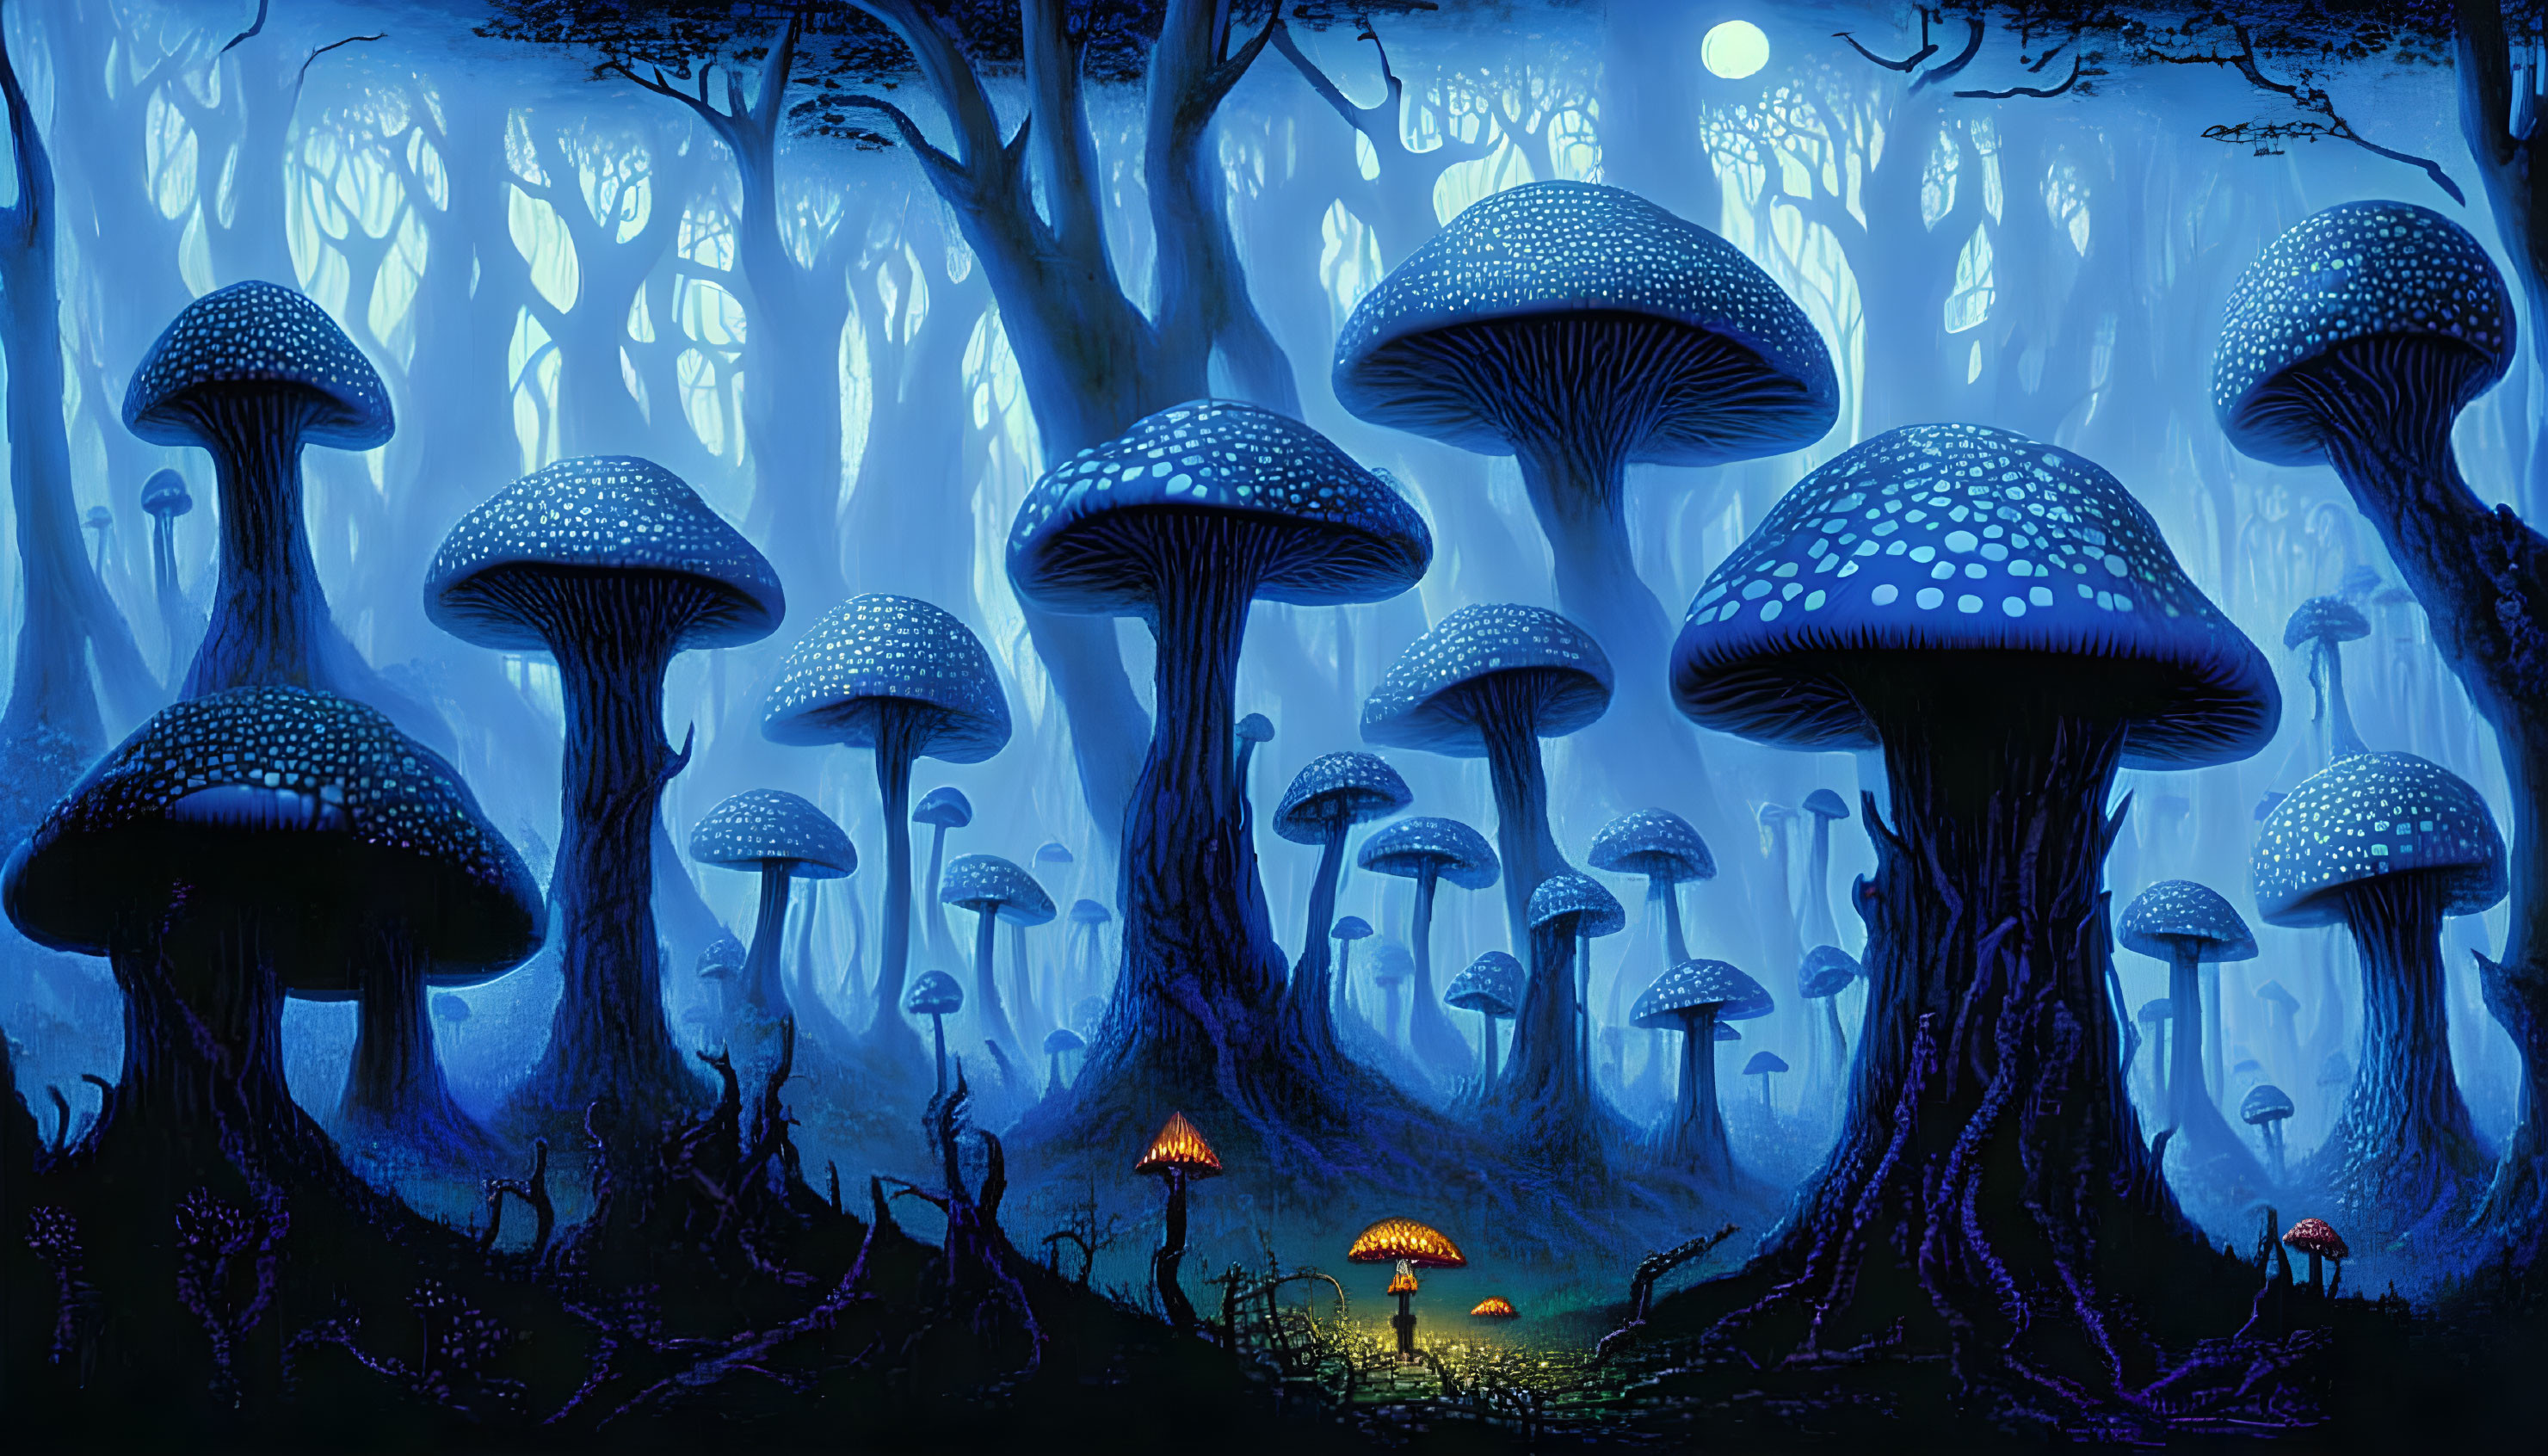 The Blue Mushroom Forest